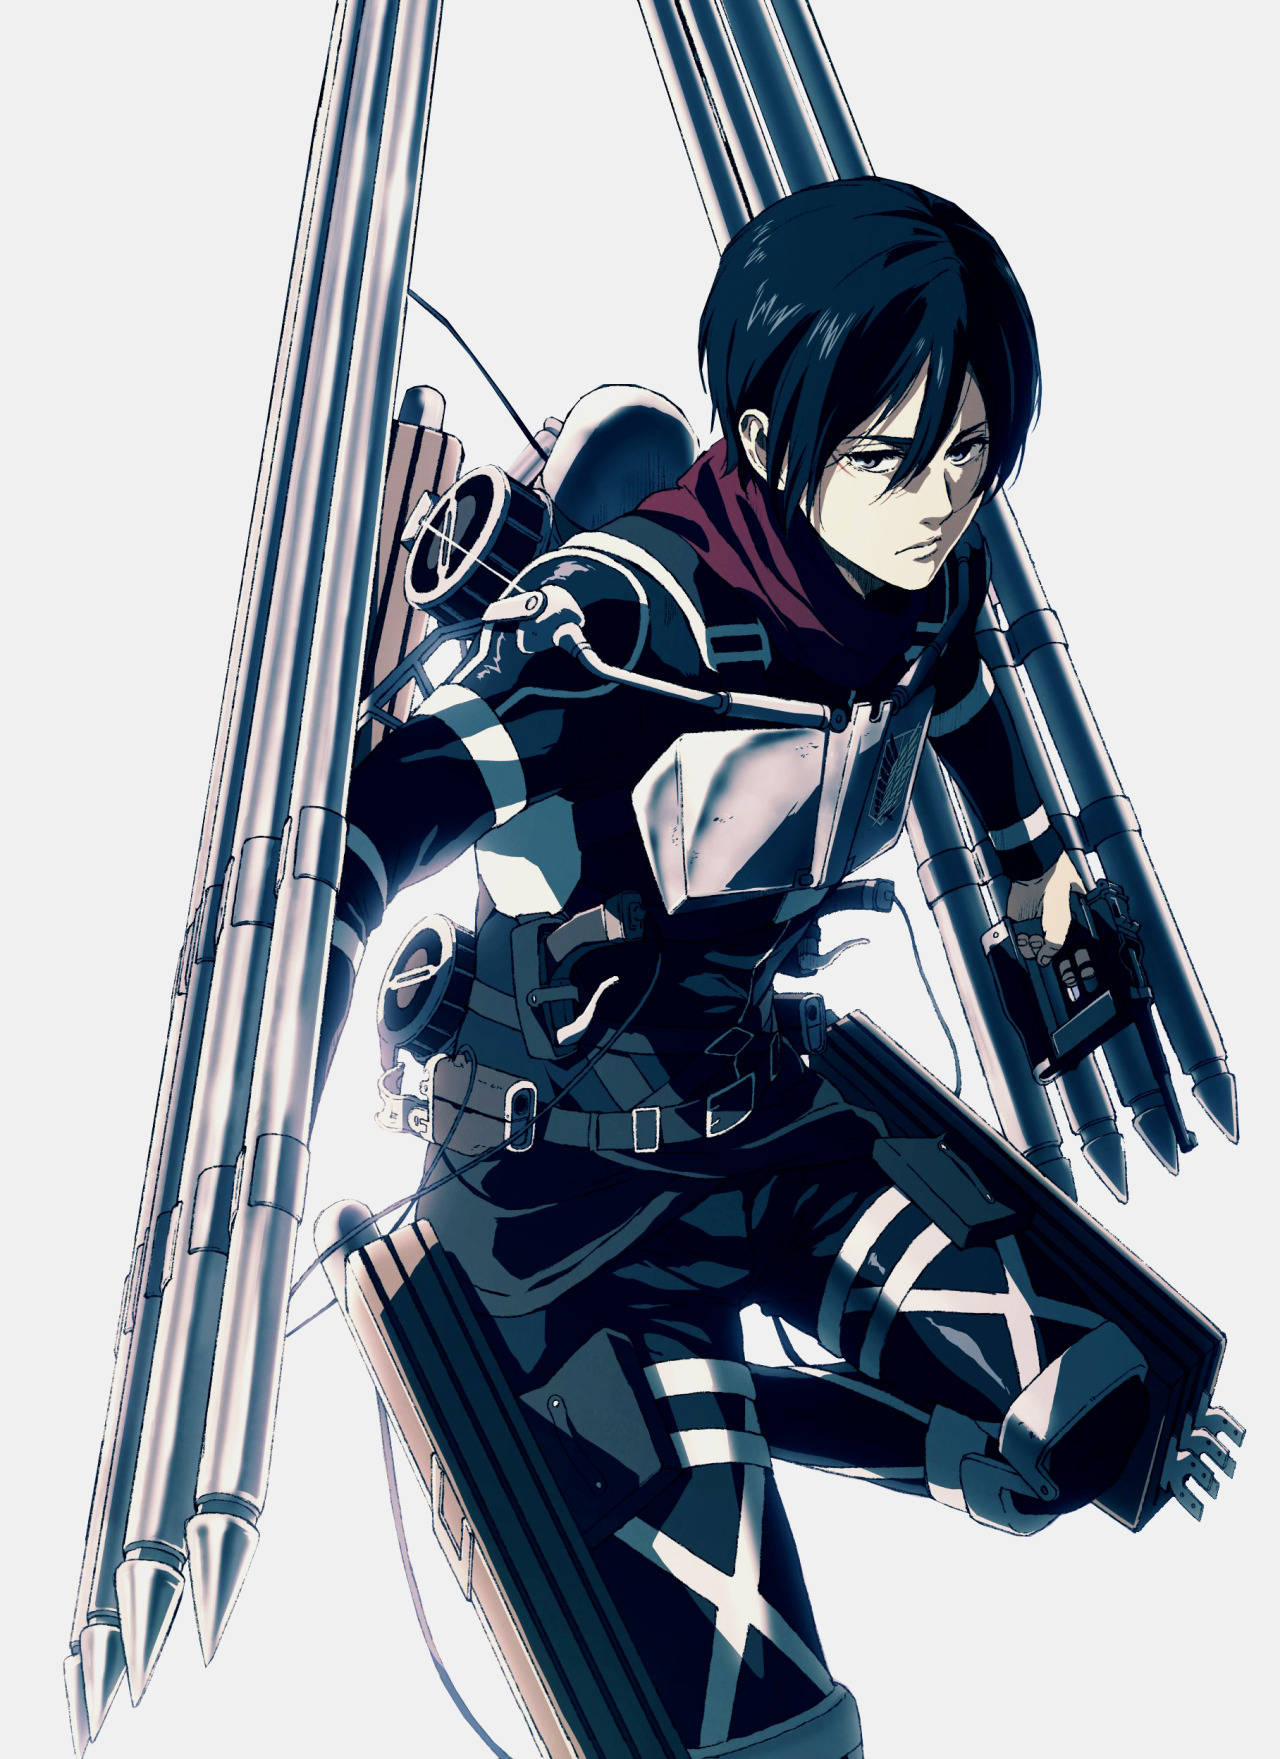 Mikasa Ackerman Thunder Spear Background